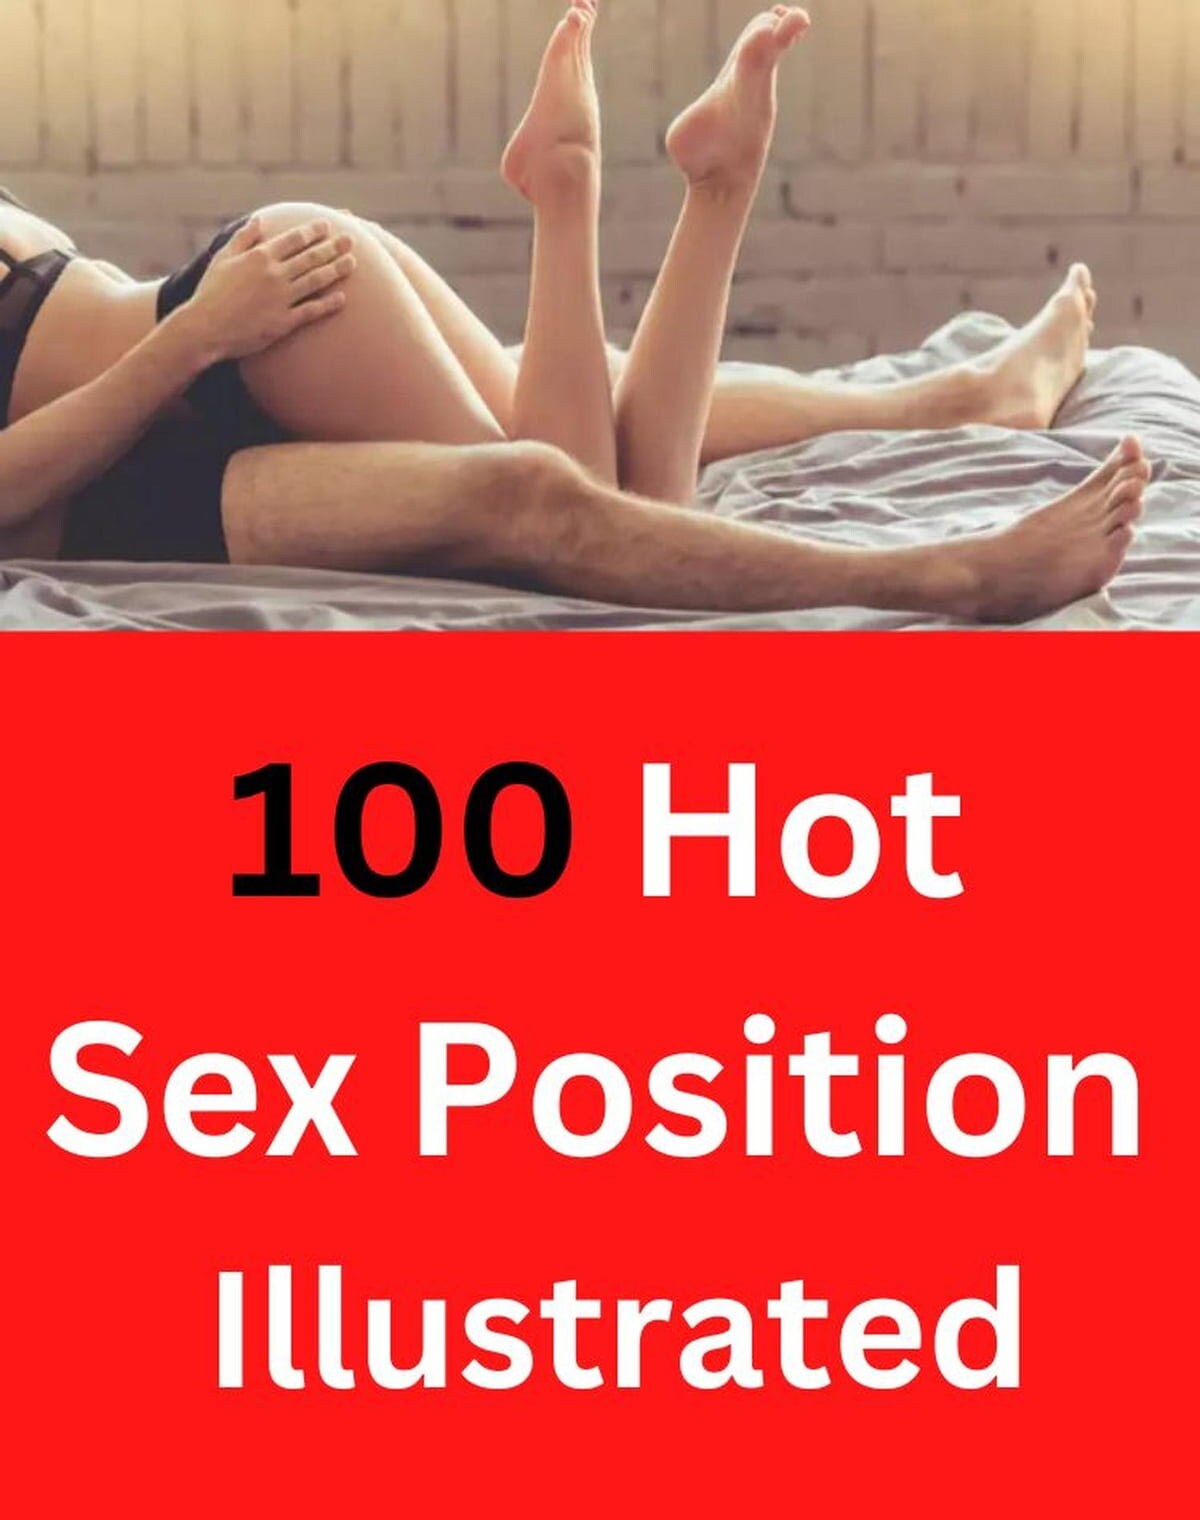 Sex position images